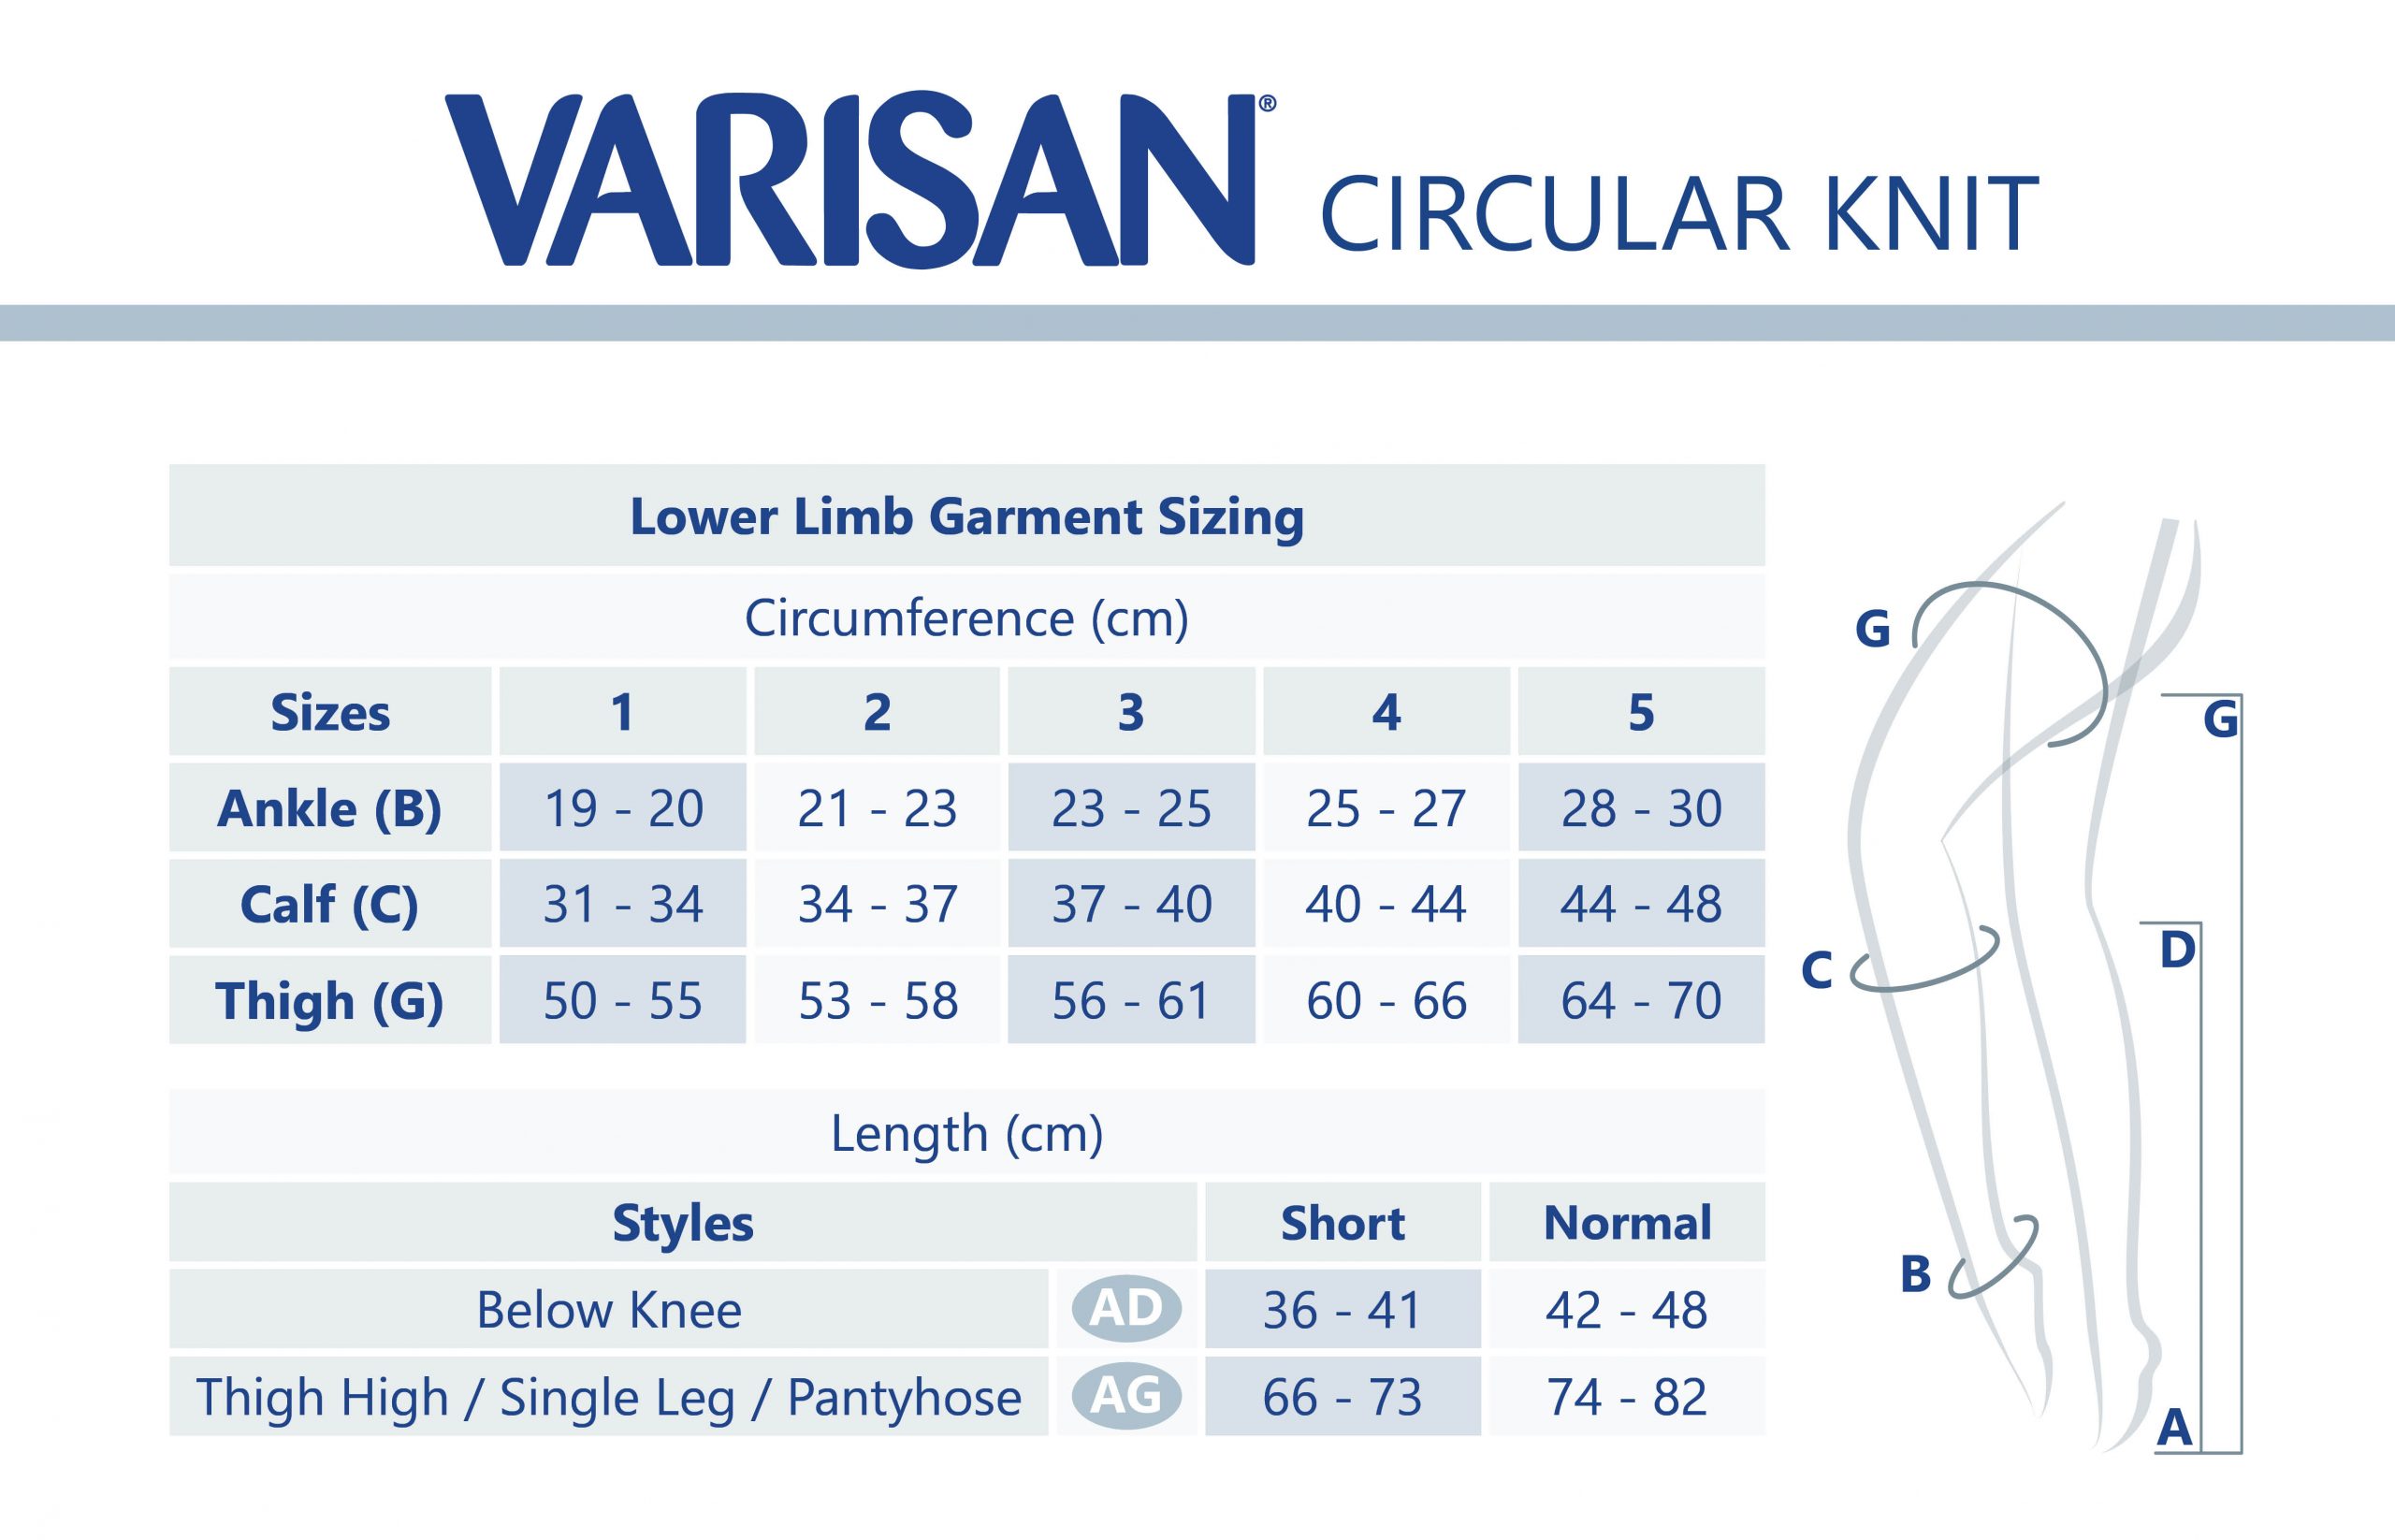 Varisan - Flat Knit Class 2, Thigh High, Open Toe Stocking